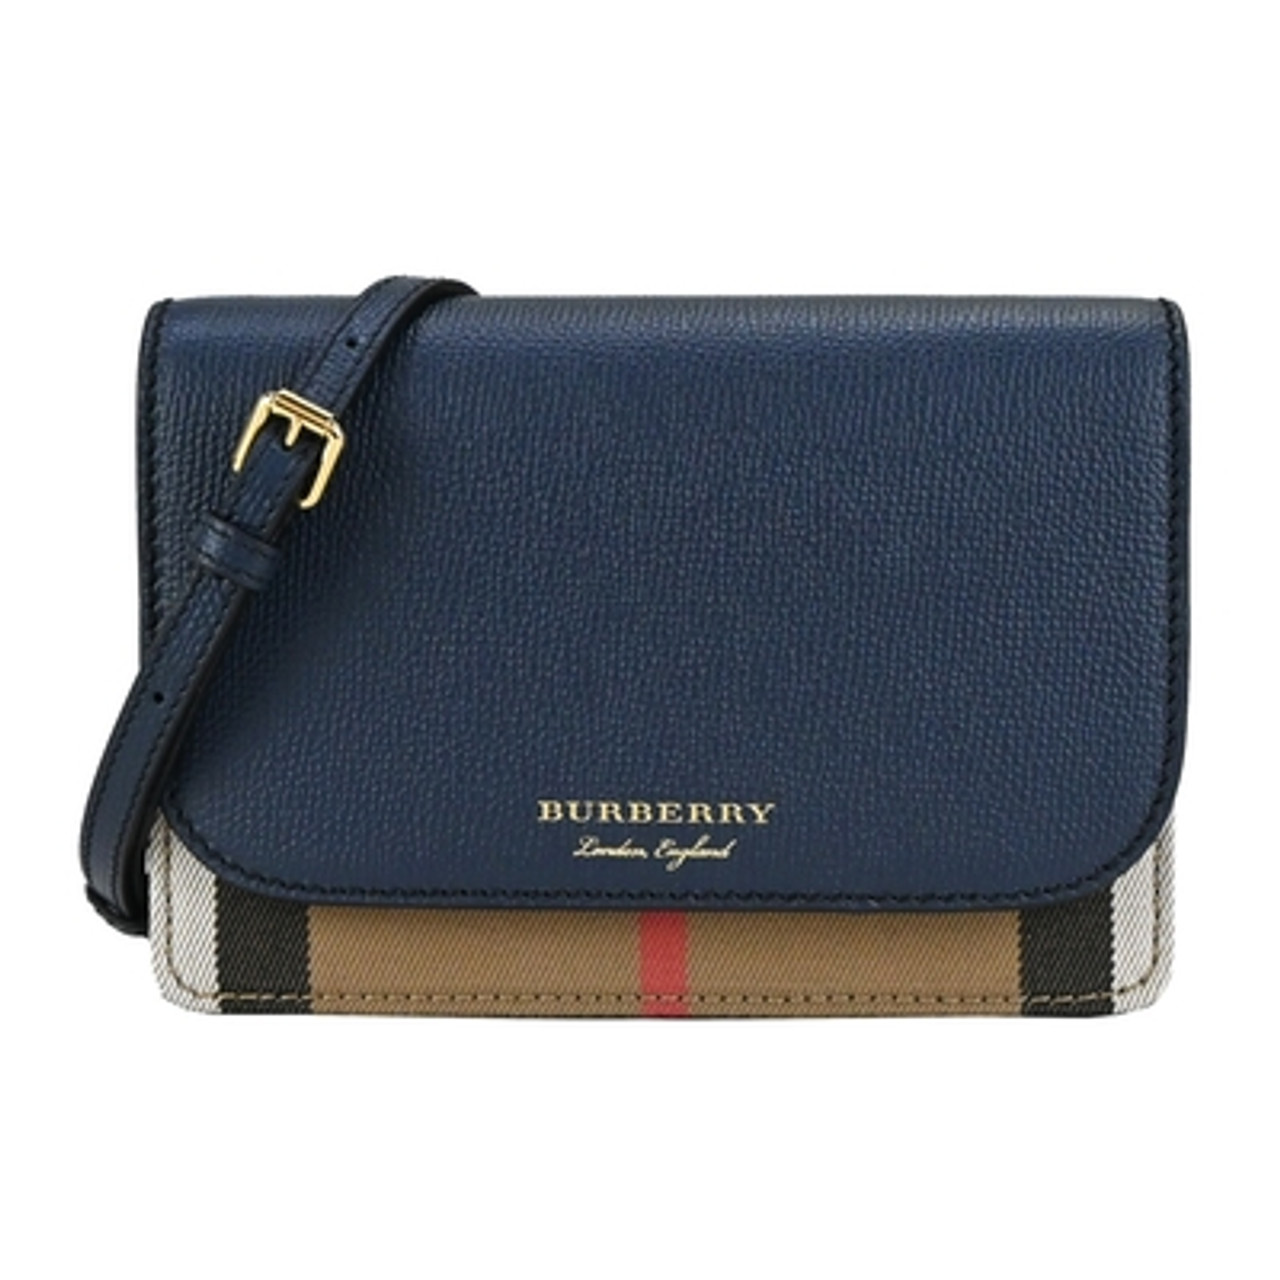 Sale! BURBERRY Burberrys Beige Check Tartan Shoulder / Crossbody Bag .  British designer purse. | Burberry bag, Burberry, Purses designer